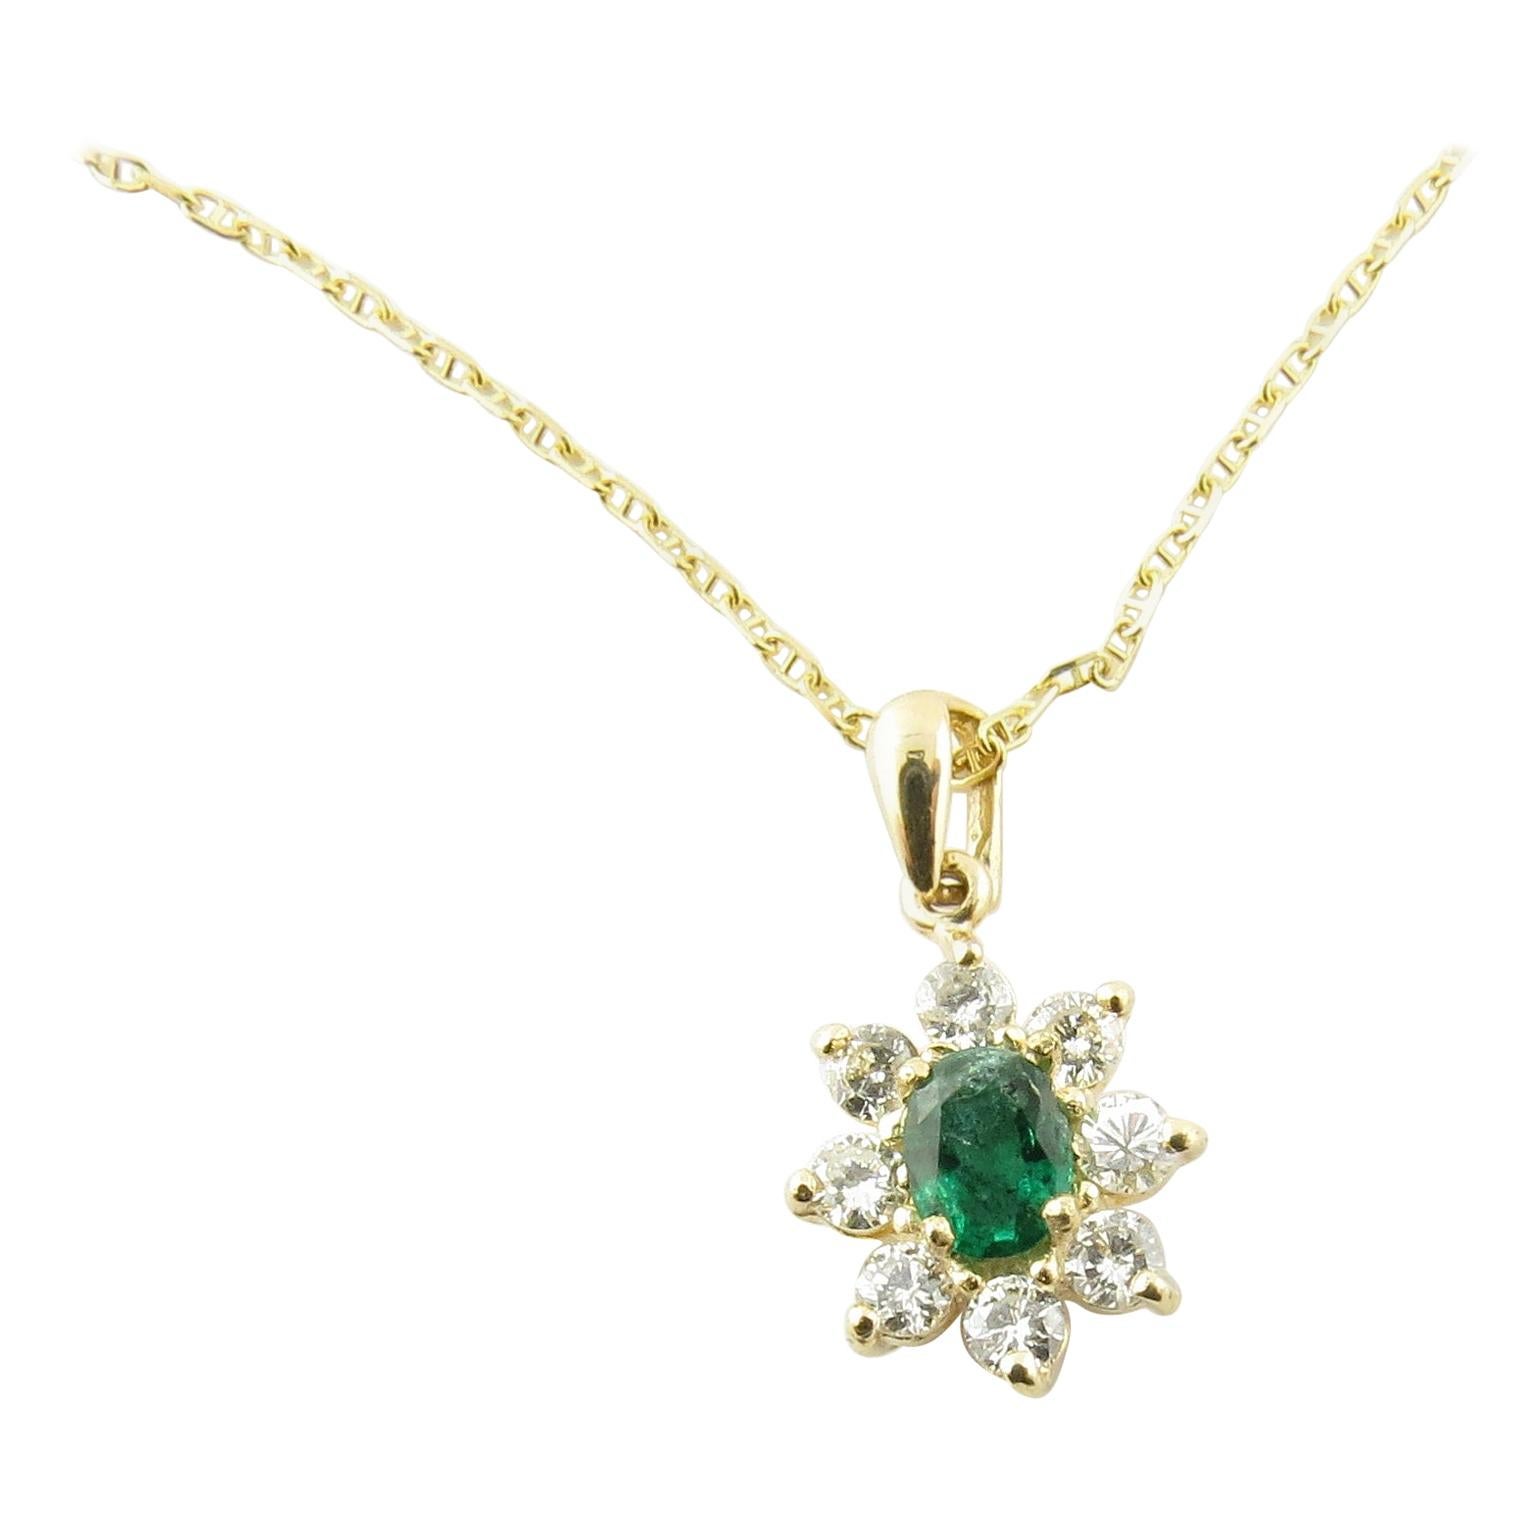 14 Karat Yellow Gold Emerald and Diamond Pendant Necklace